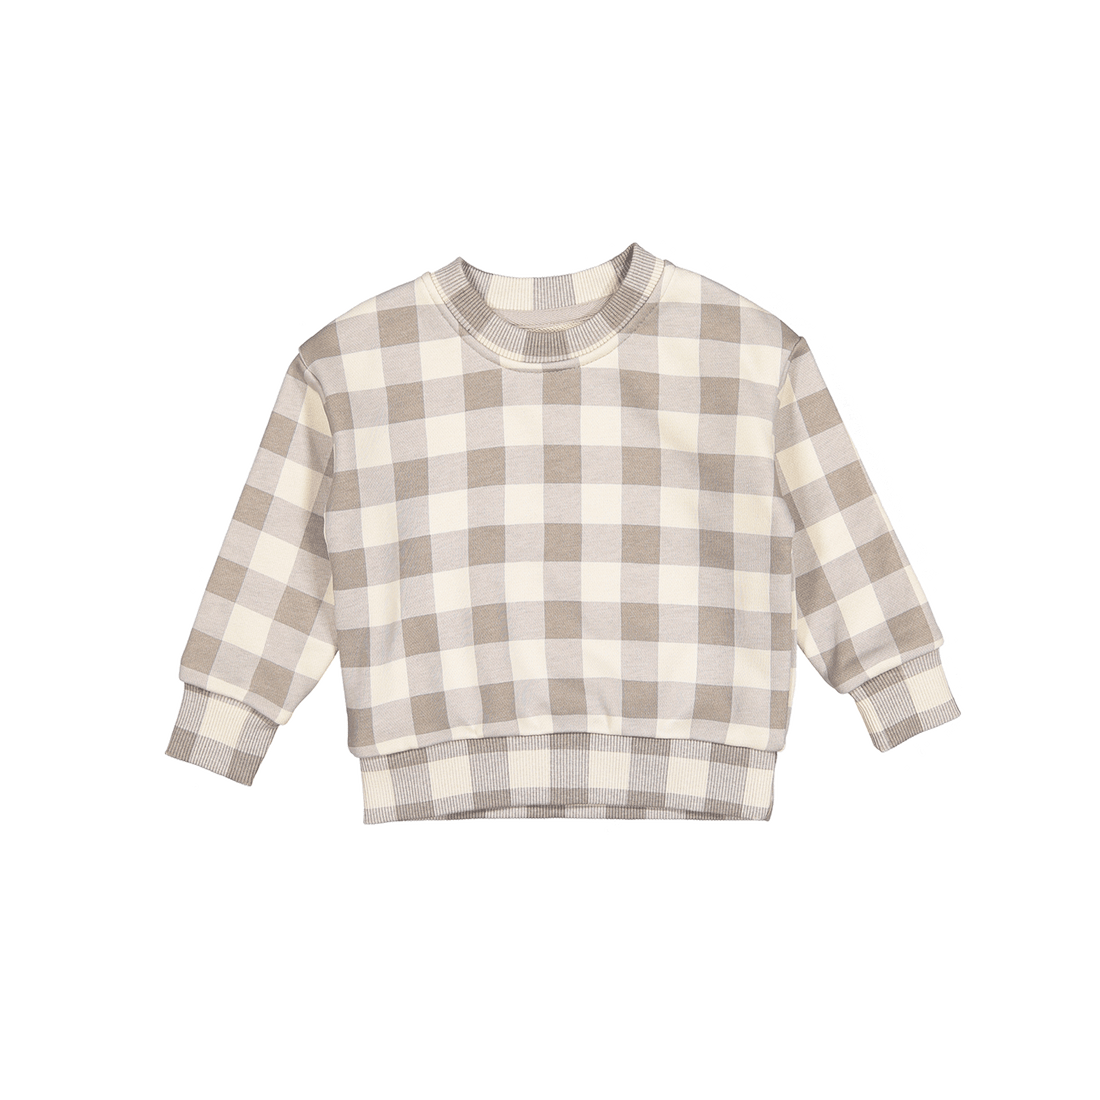 The Printed Sweatshirt - Taupe Gingham